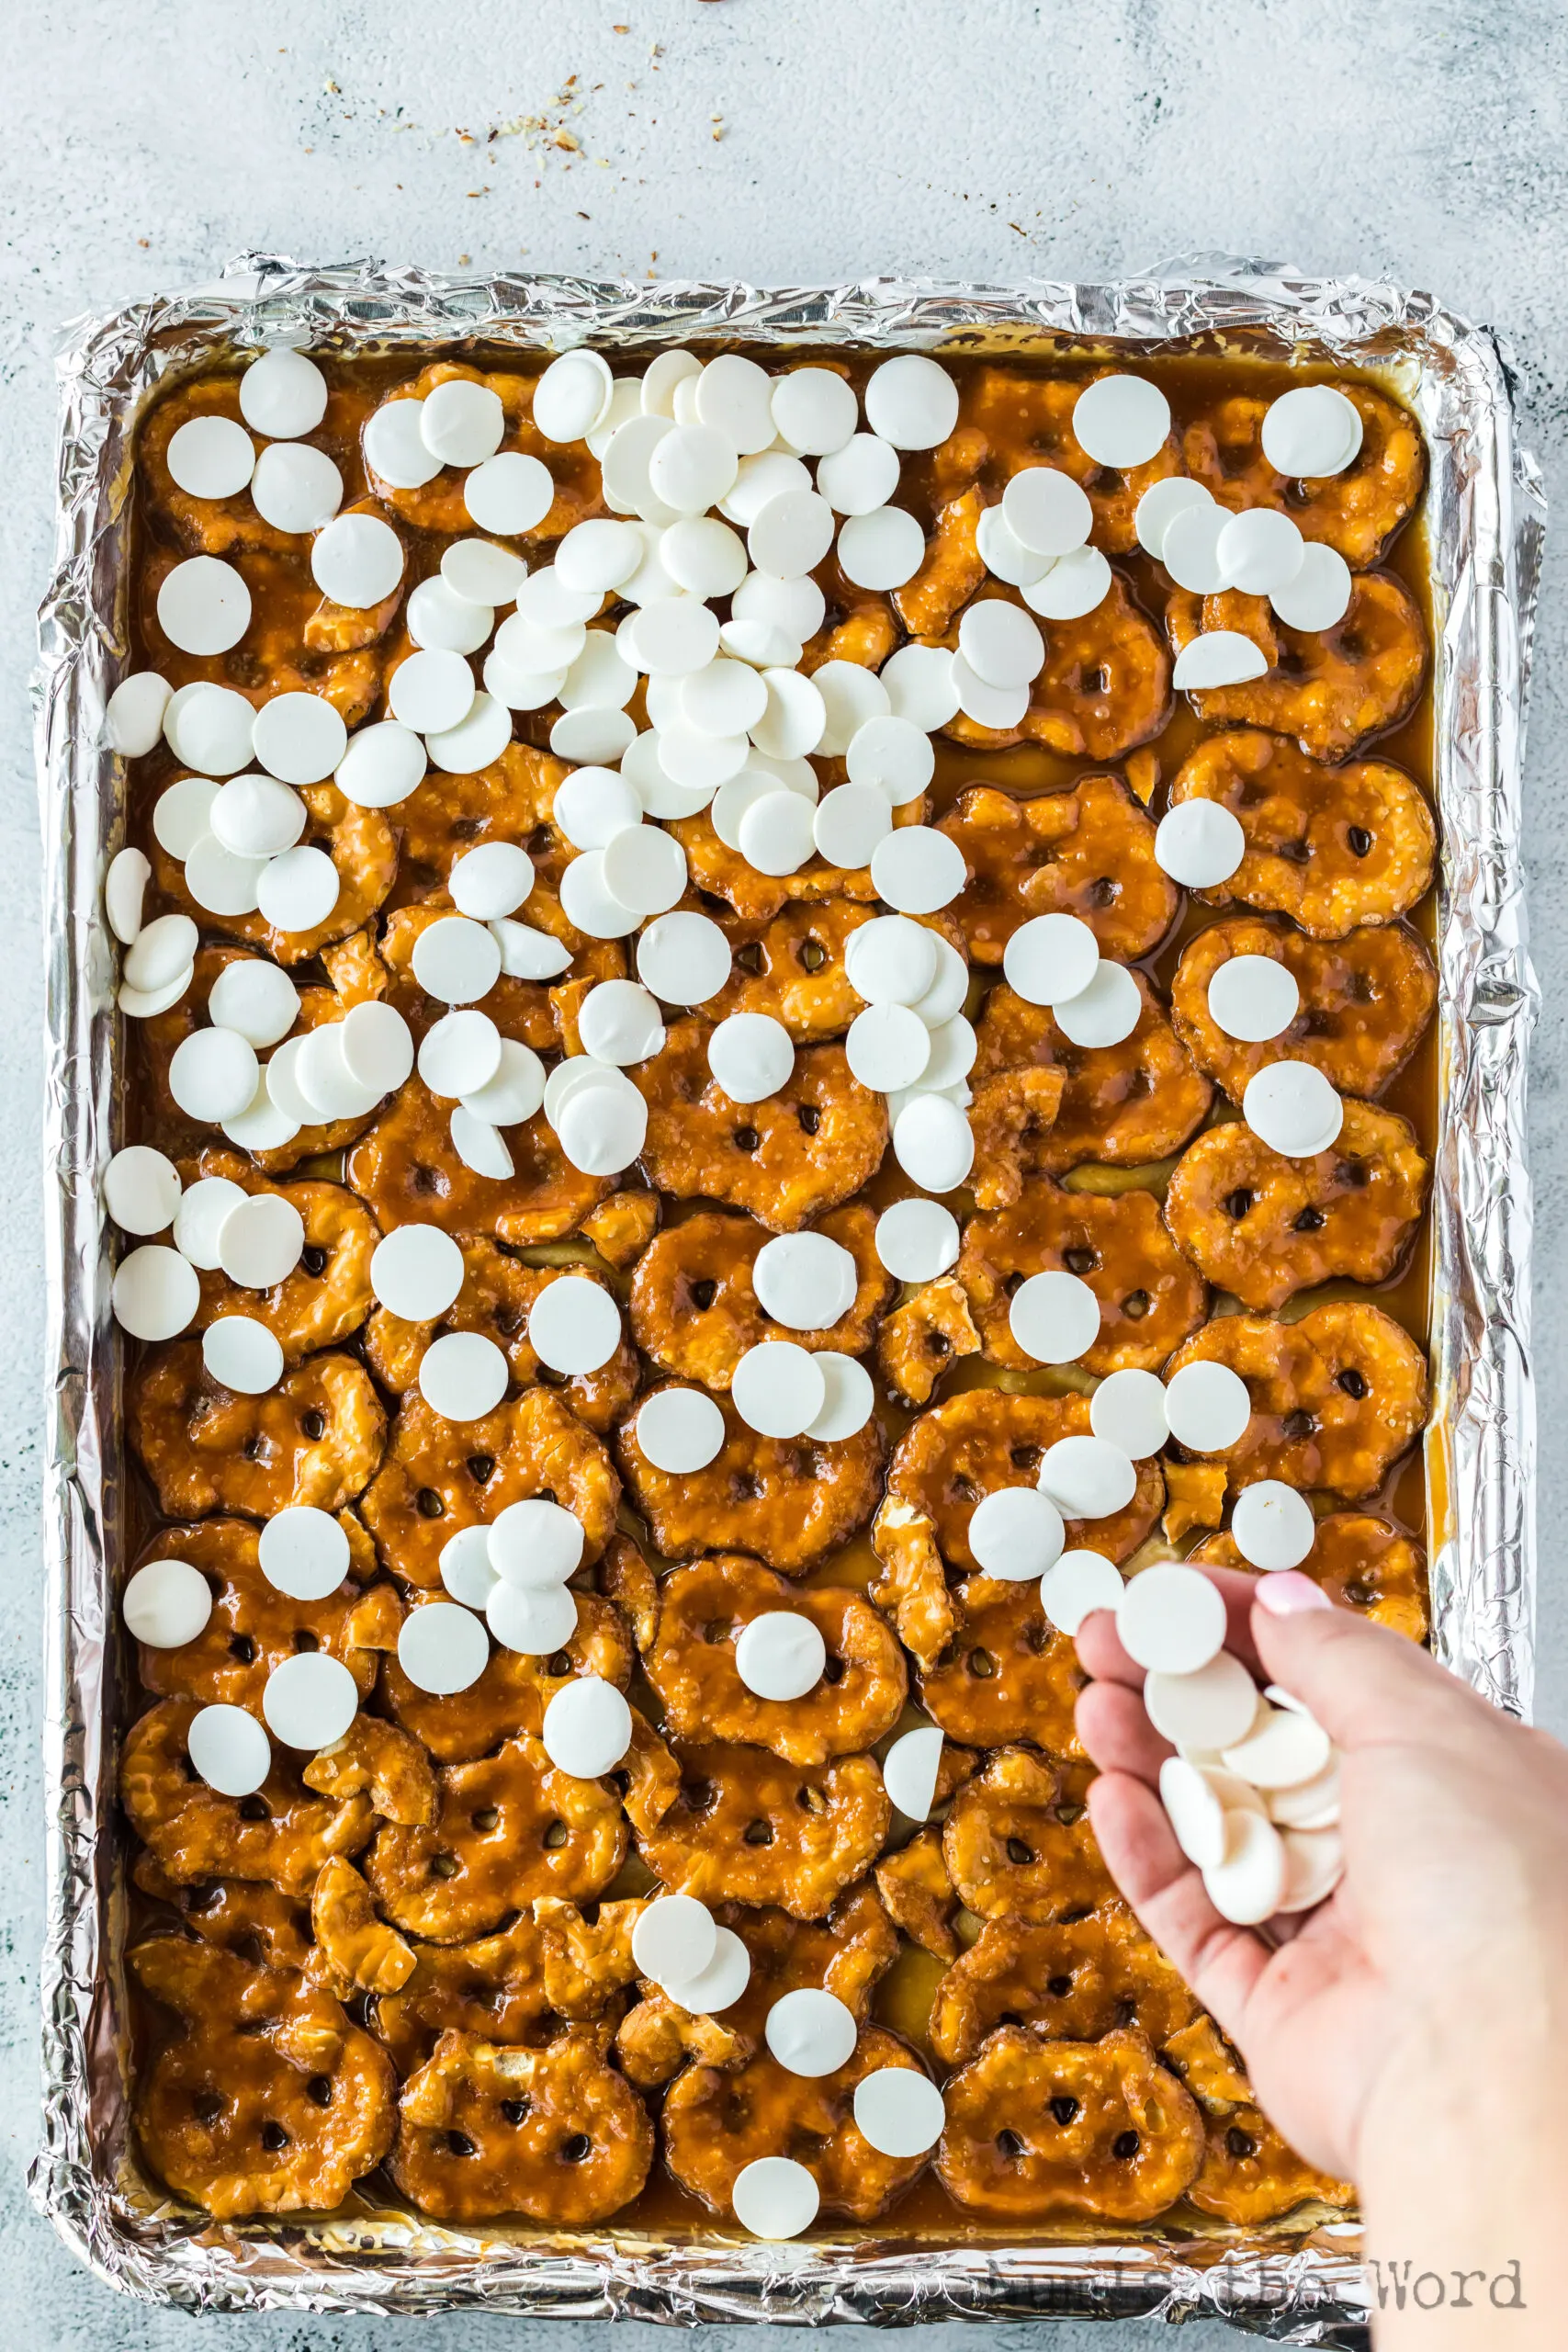 White chocolate chips sprinkled all over caramel pretzels